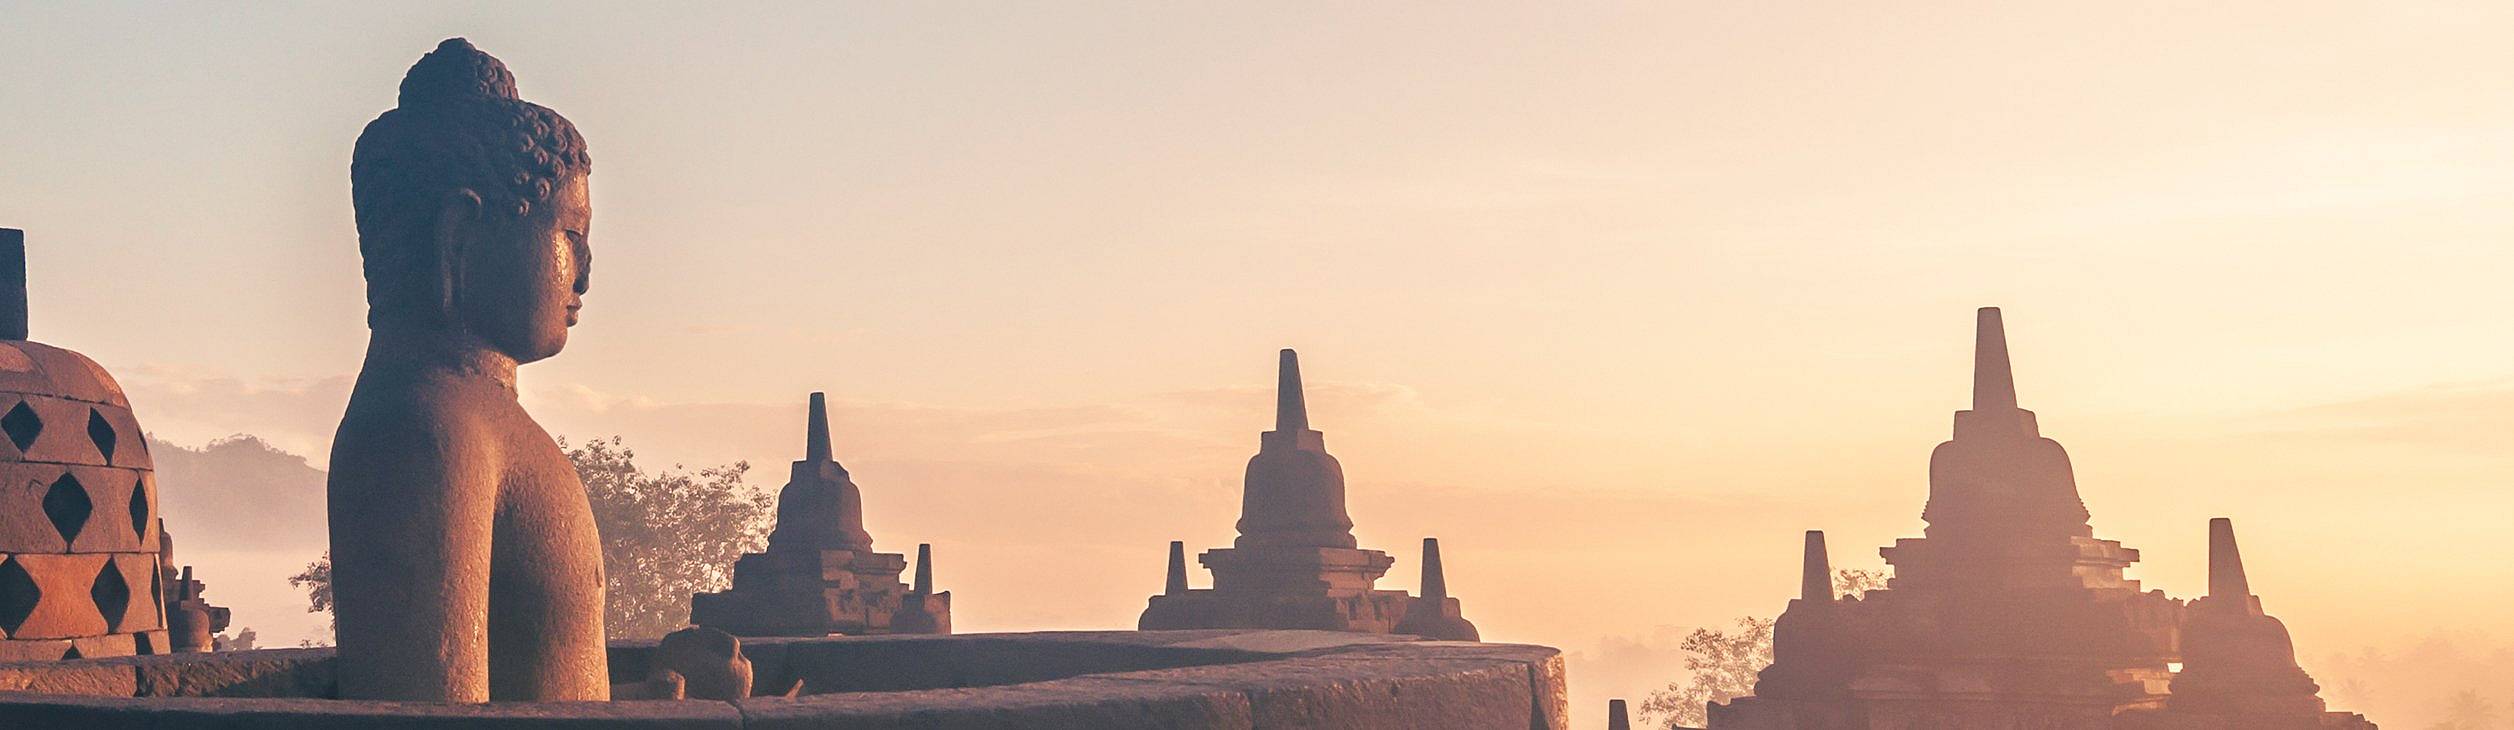 Borobudur-Tempel bei Sonnenaufgang